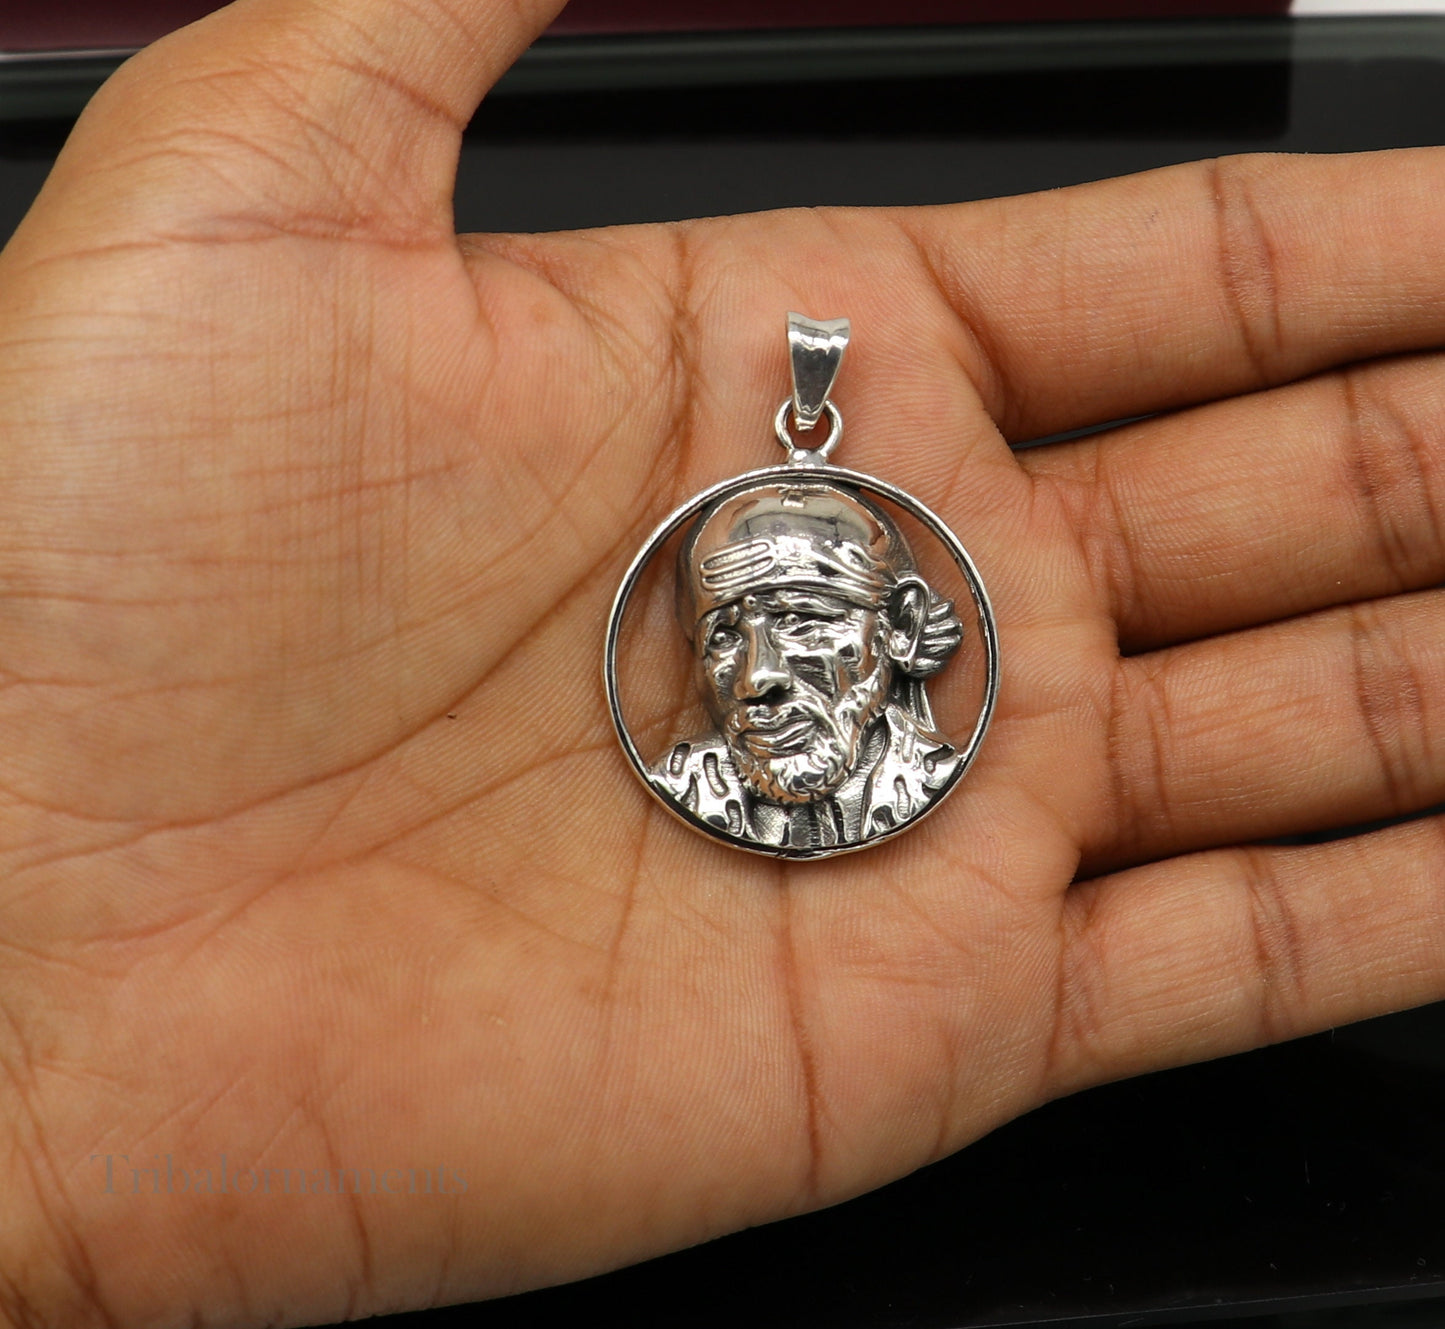 Iidol Sai Baba pendant 925 sterling silver handmade amazing stylish unisex pendant locket personalized jewelry tribal jewelry ssp945 - TRIBAL ORNAMENTS